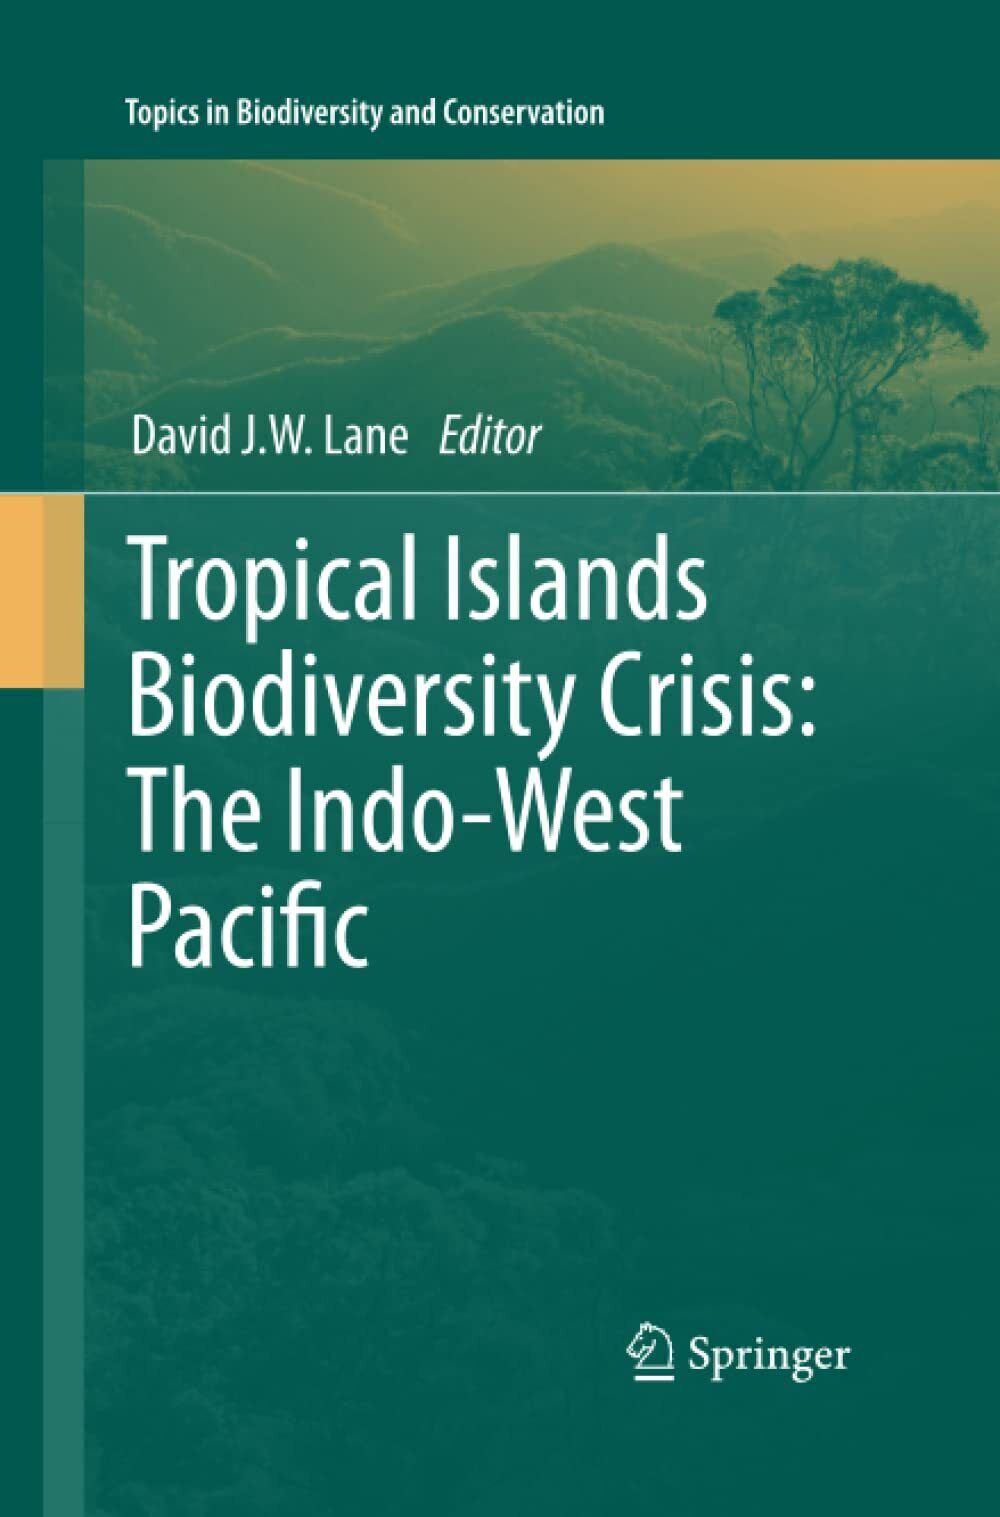 Tropical Islands Biodiversity Crisis - David J.W. Lane - Springer, 2014